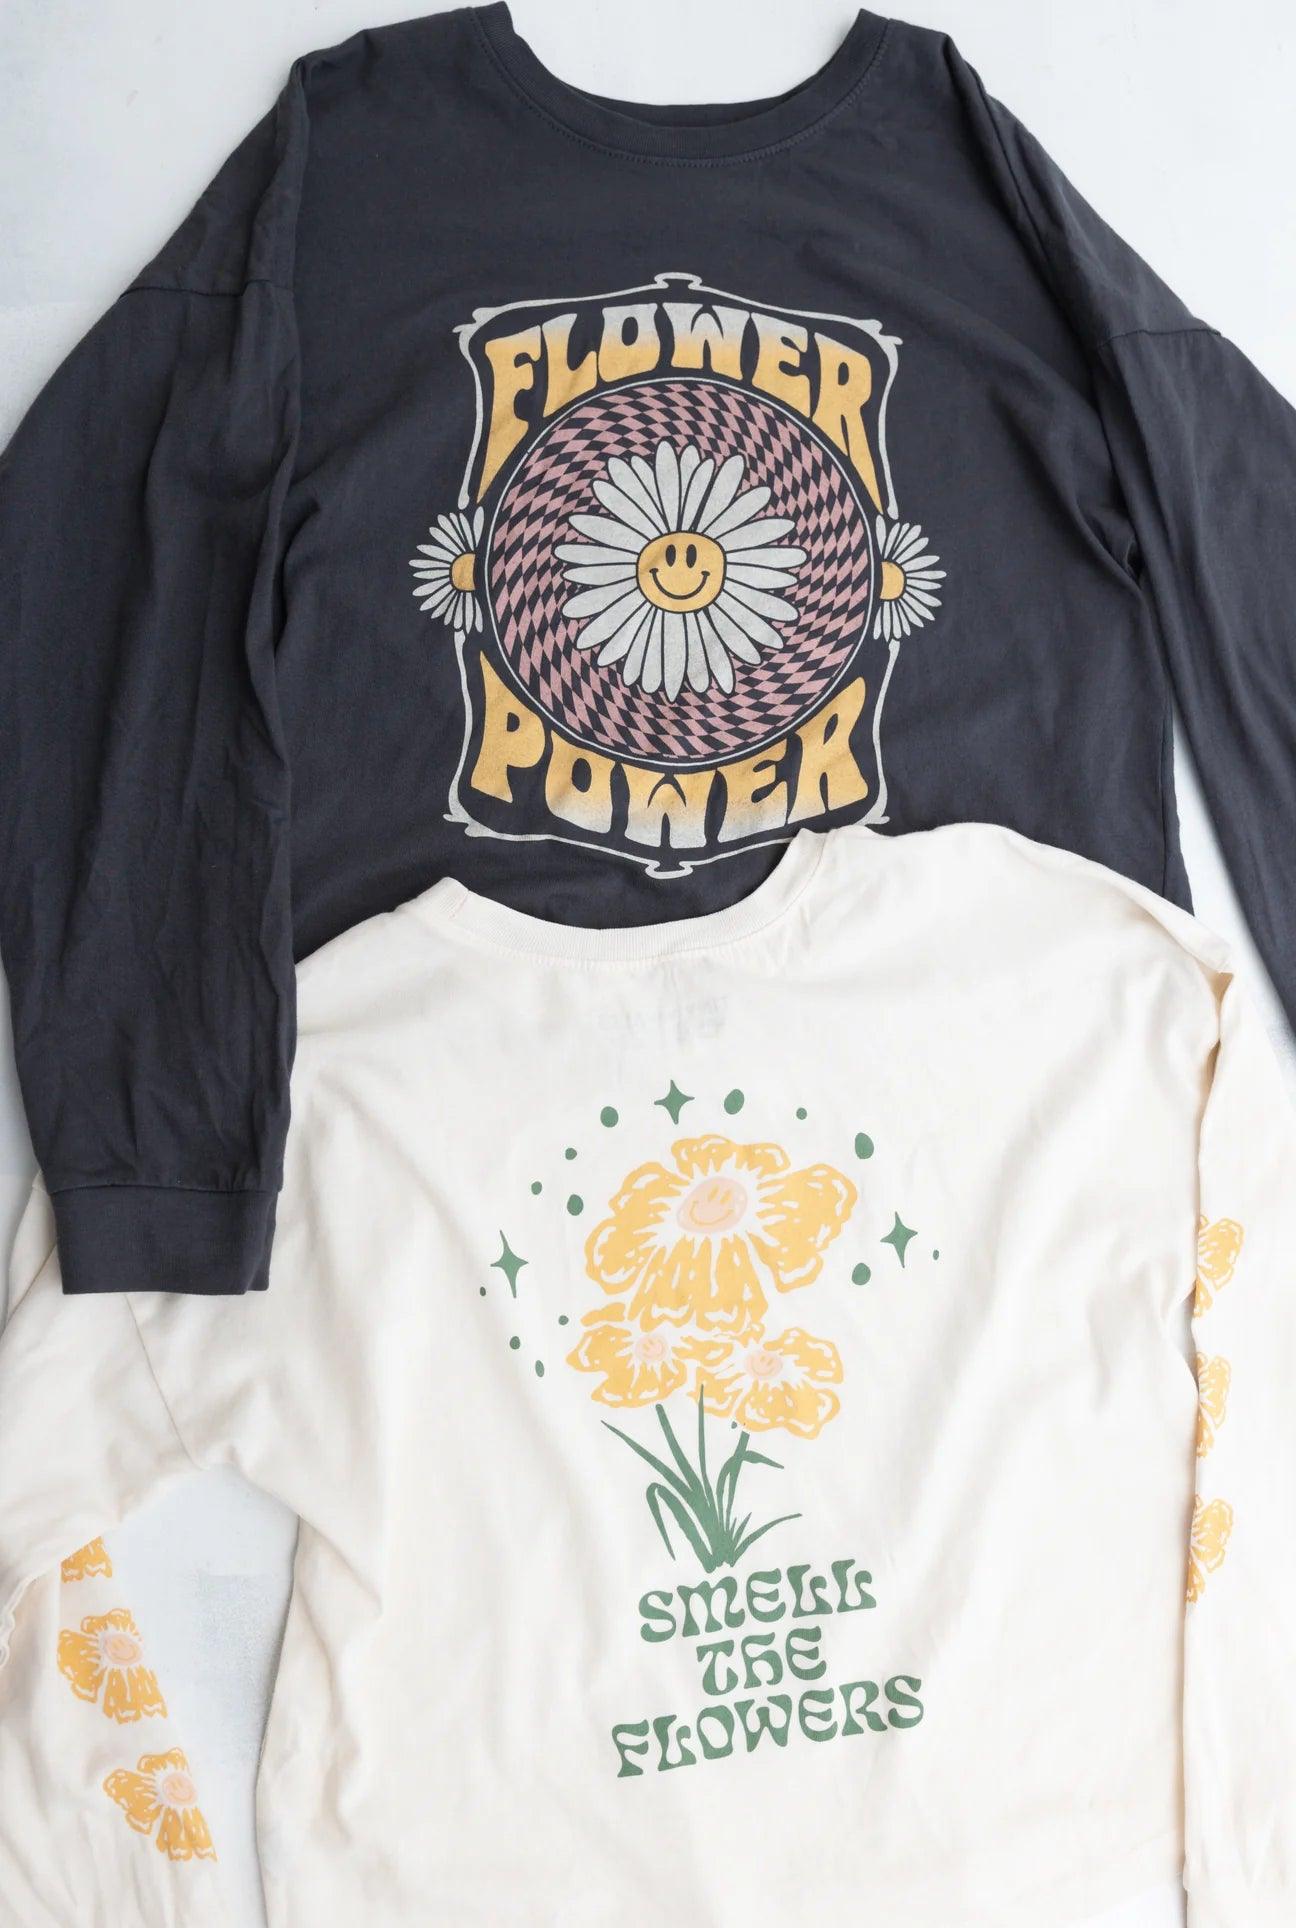 Smell the Flowers Girls Shirt - Sprig Flower Co